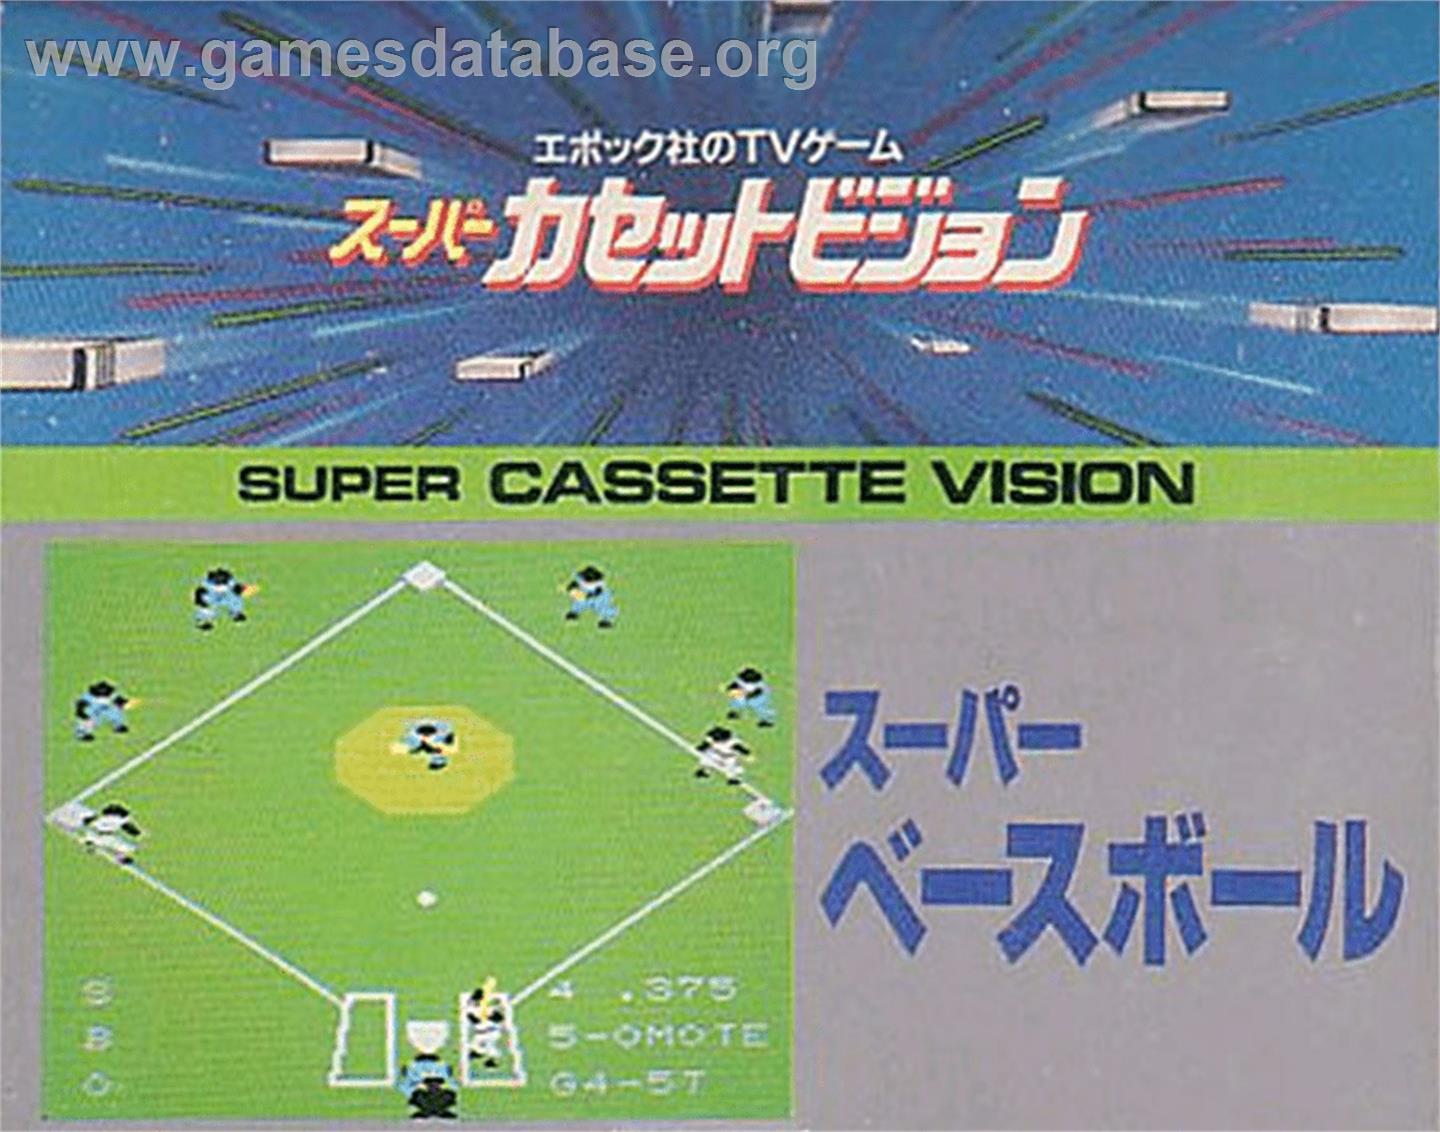 Super Baseball - Epoch Super Cassette Vision - Artwork - Box